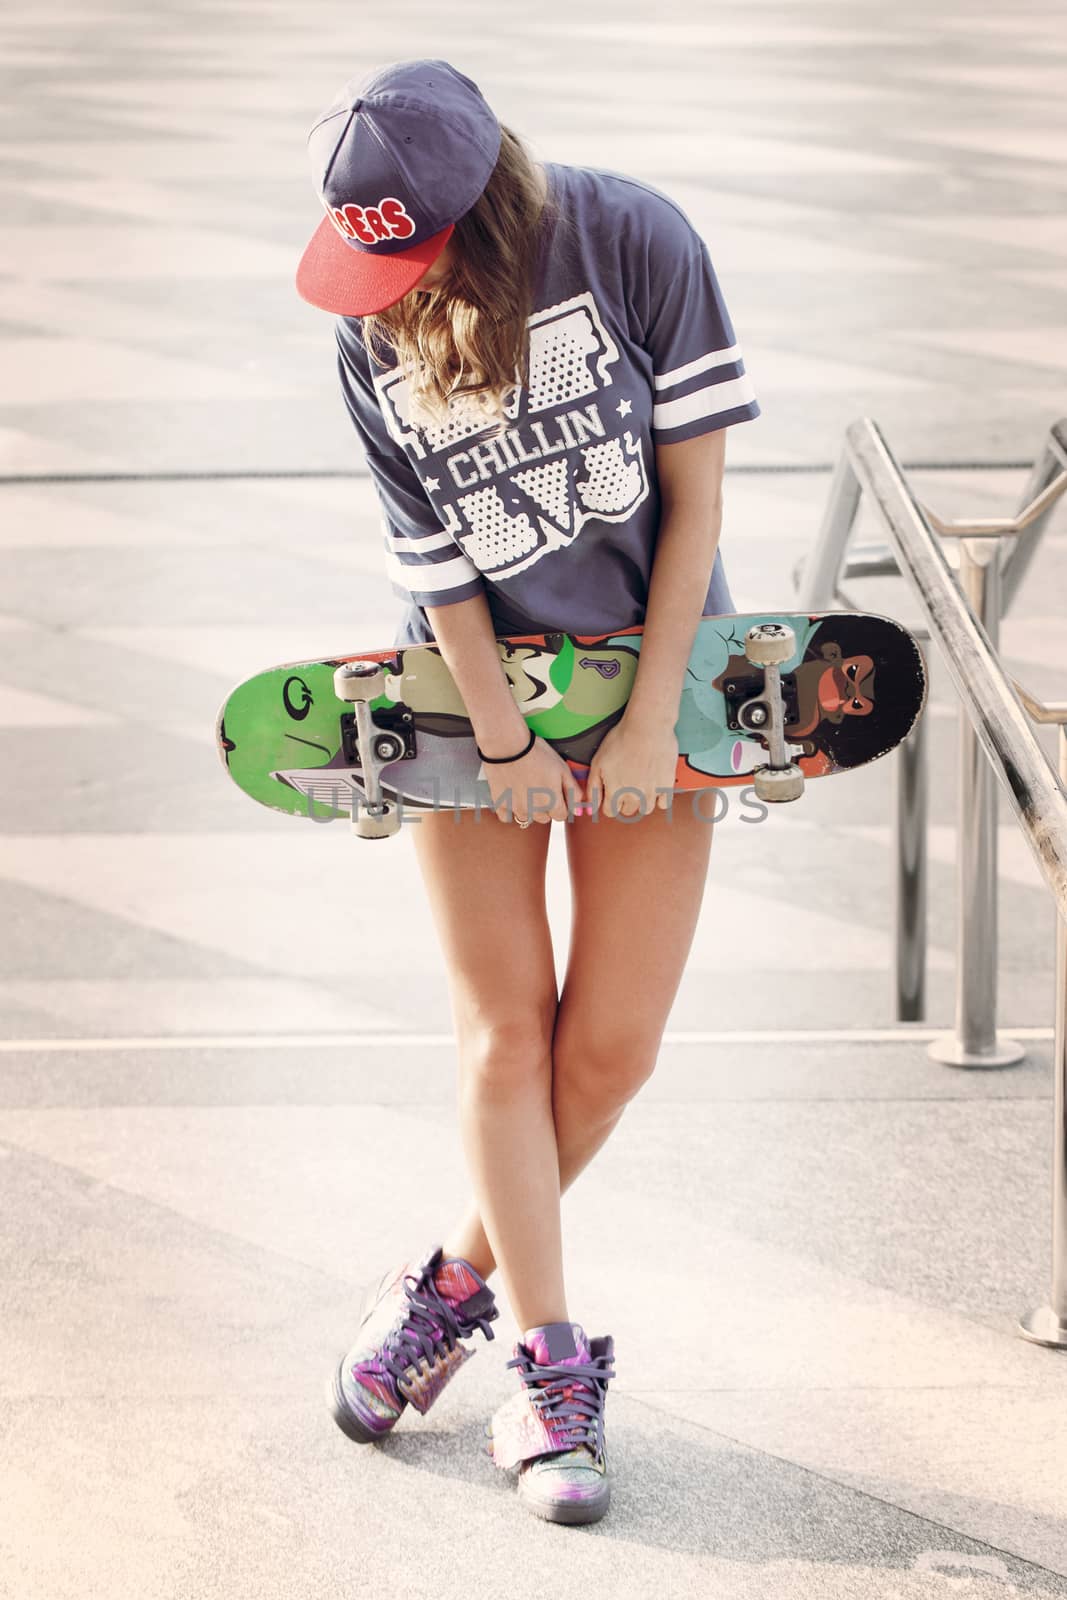 Beautiful girl at the skatepark by rufatjumali